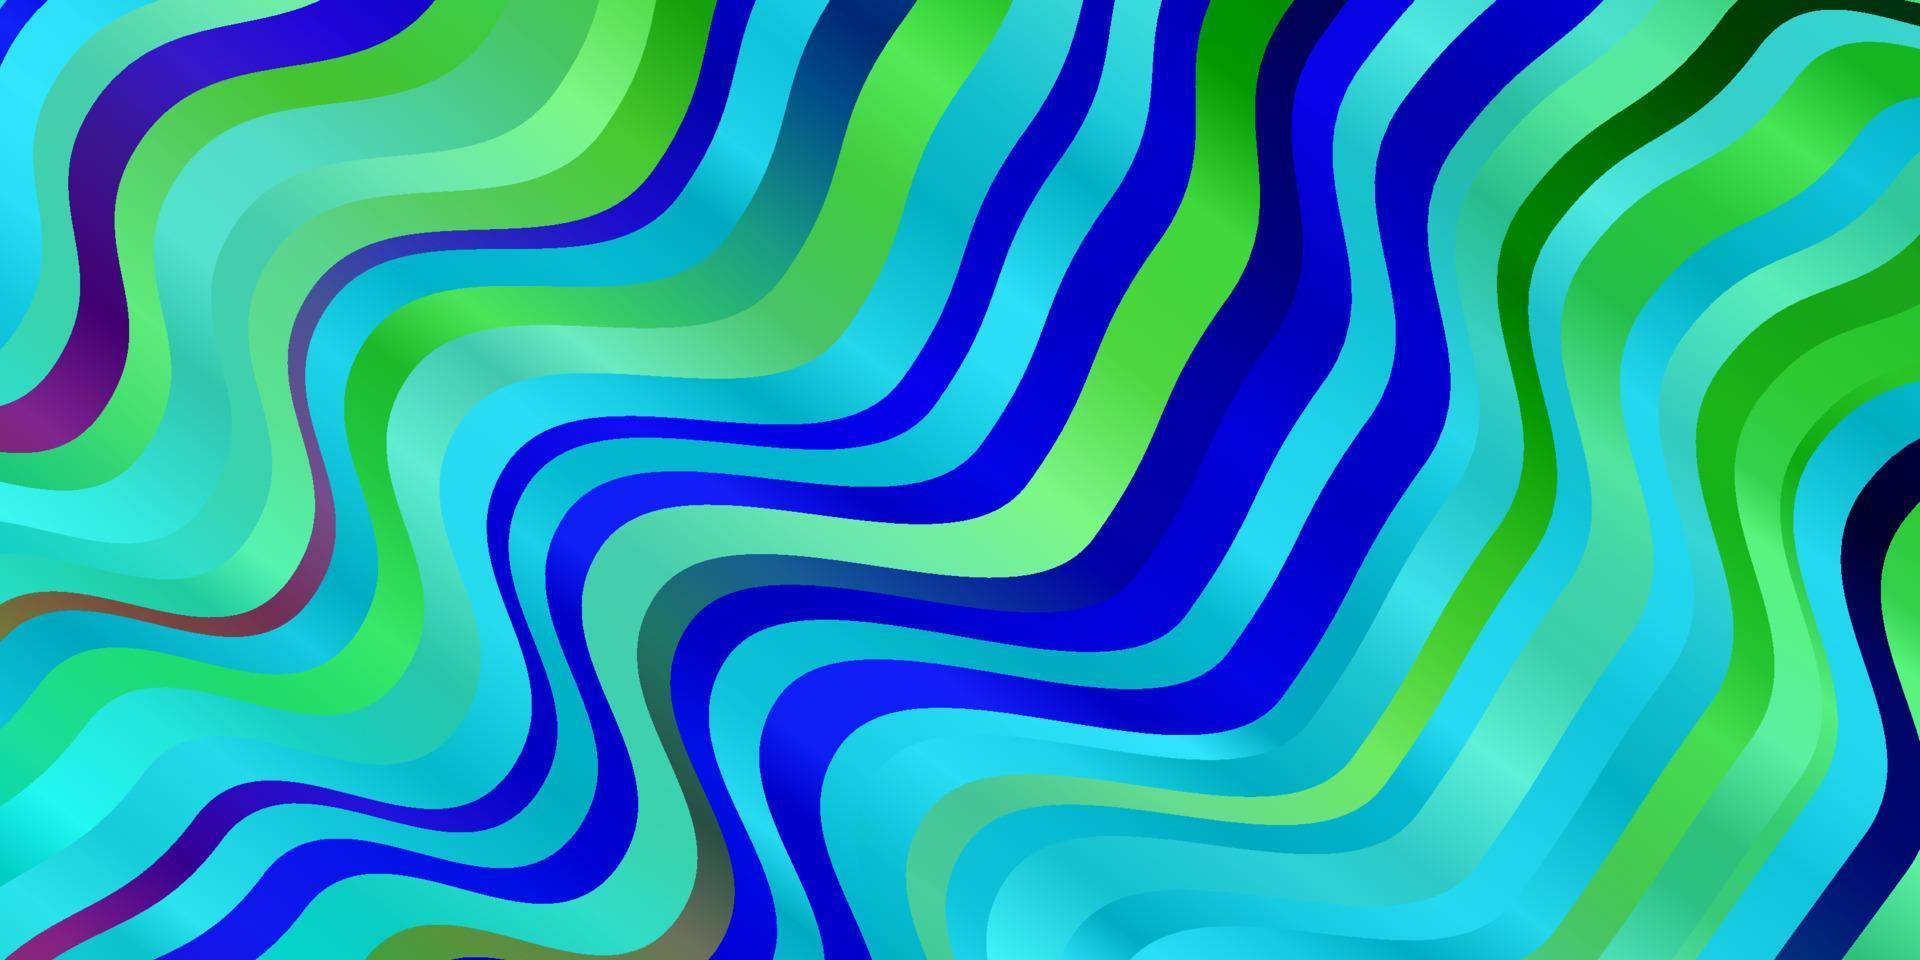 lichtblauwe, groene vectorlay-out met curven. vector